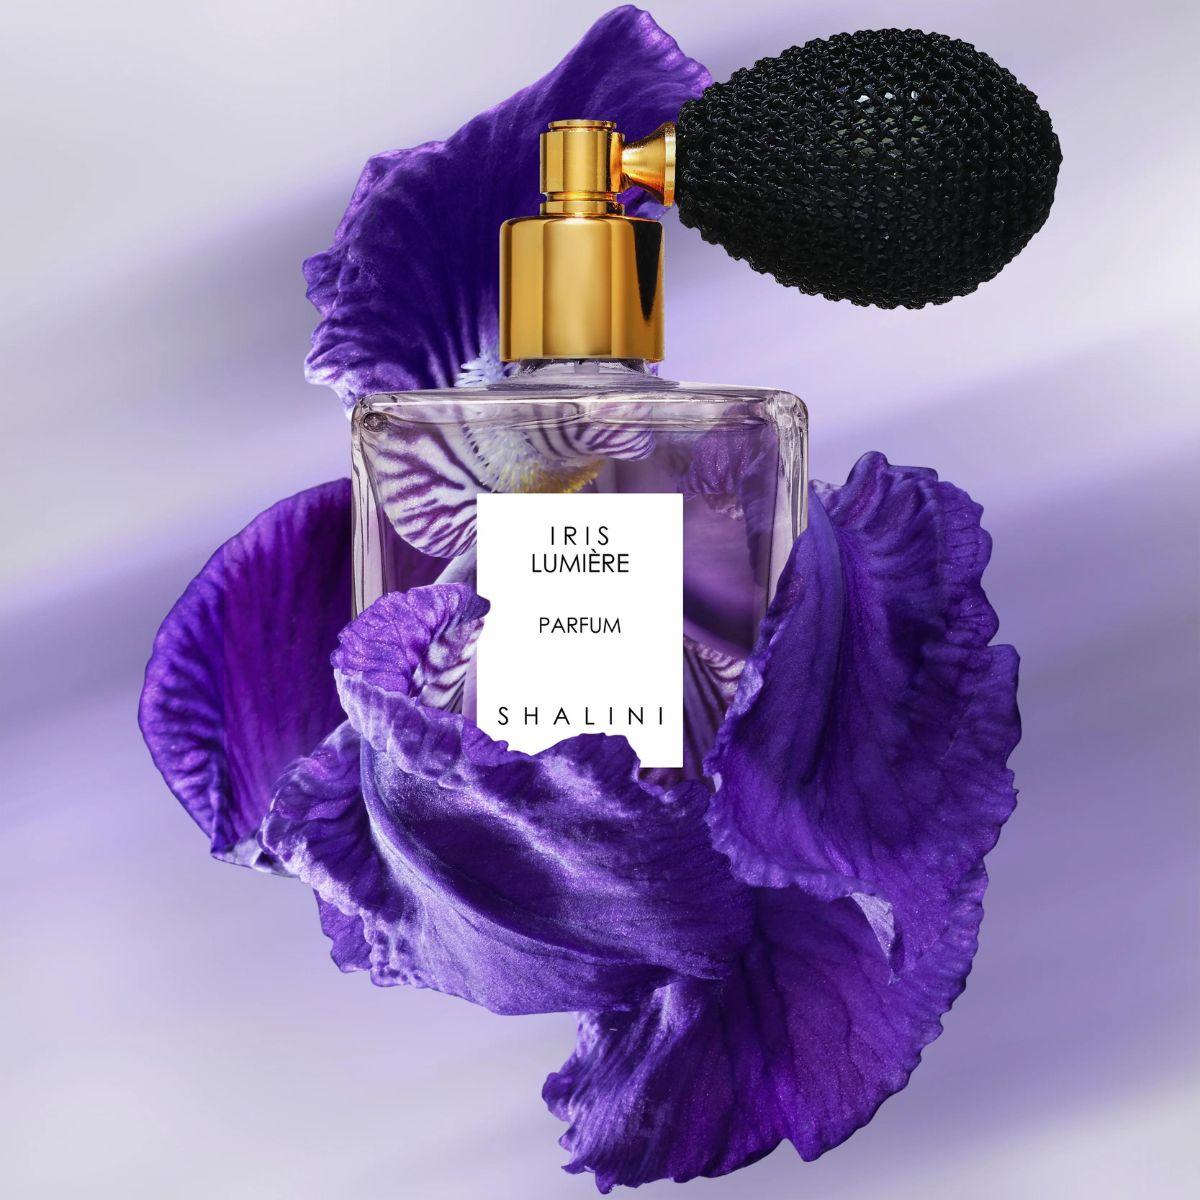 Image of Iris Lumiere bulb atomizer by the perfume brand Shalini